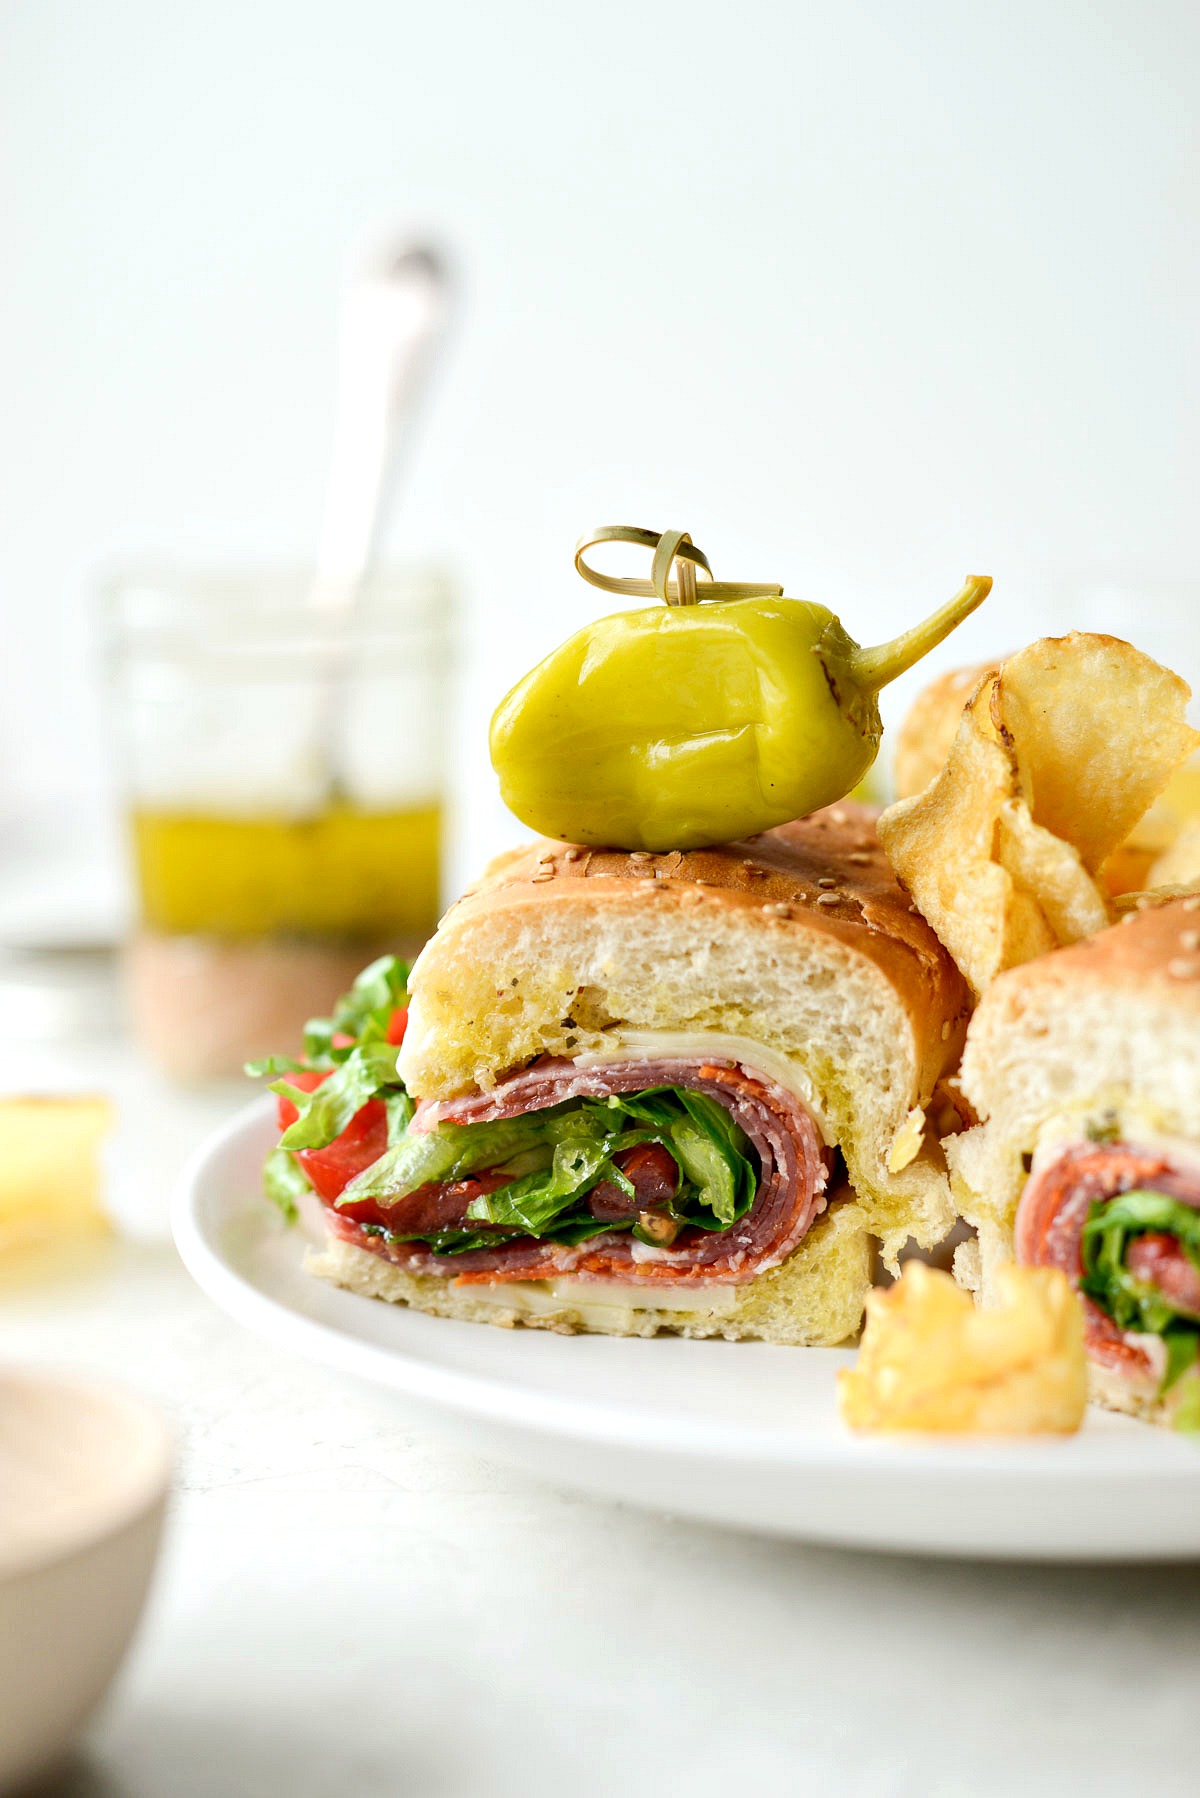 Italian Sub Sandwiches - Simply Scratch